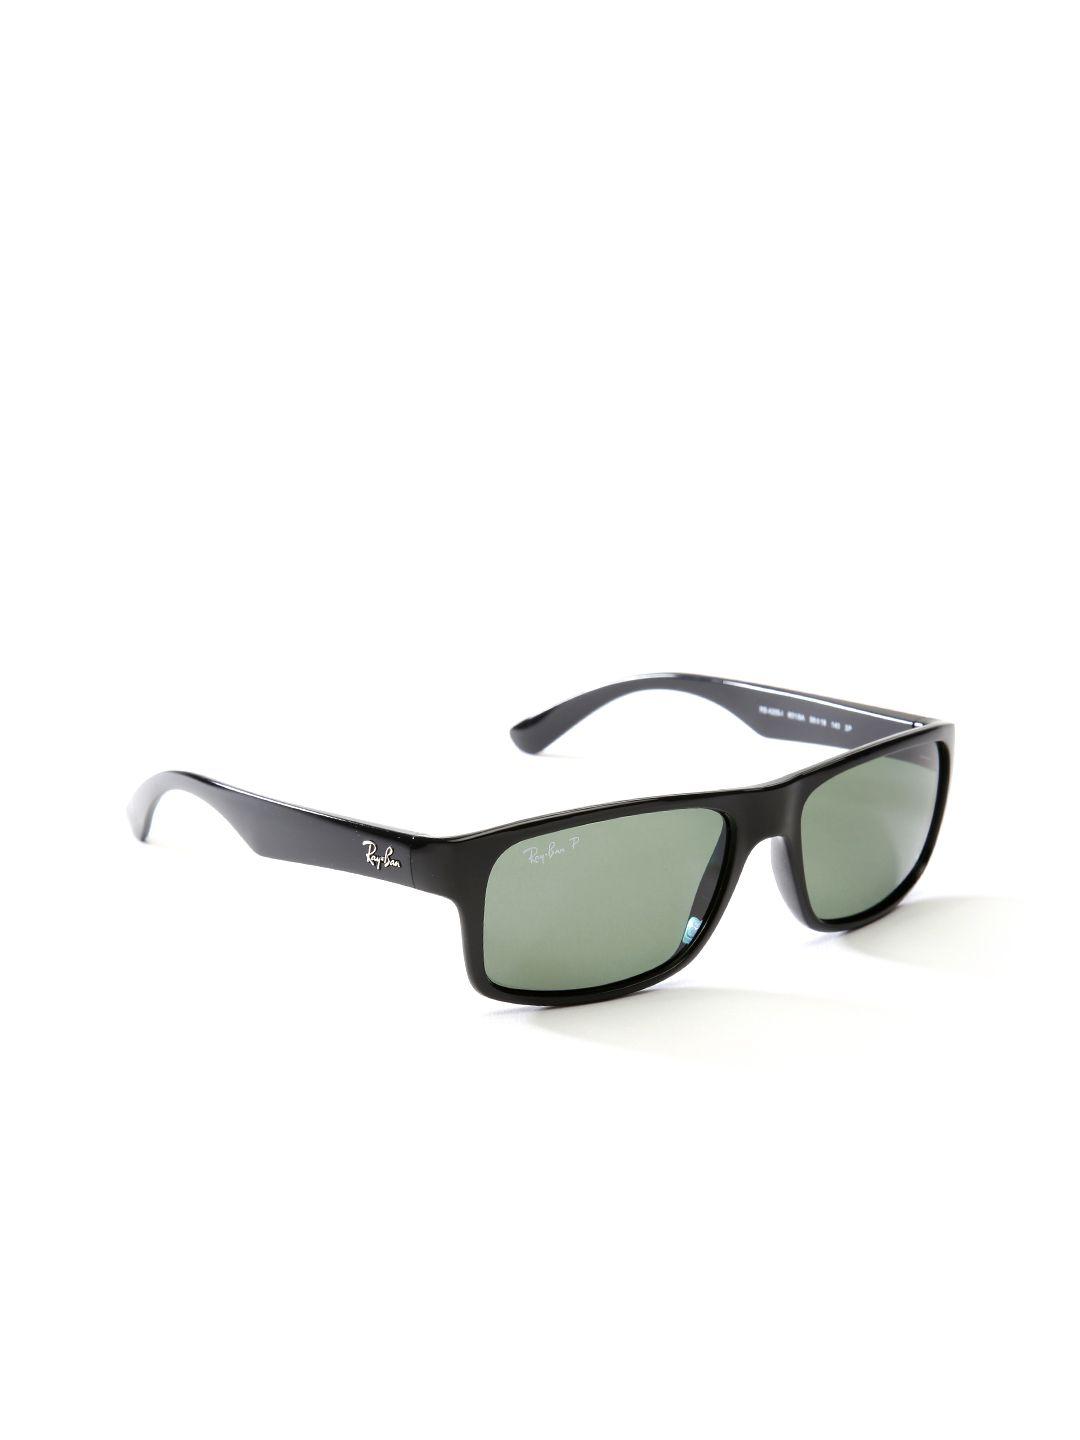 ray-ban unisex rectangular sunglasses 0rb4205i601/9a56